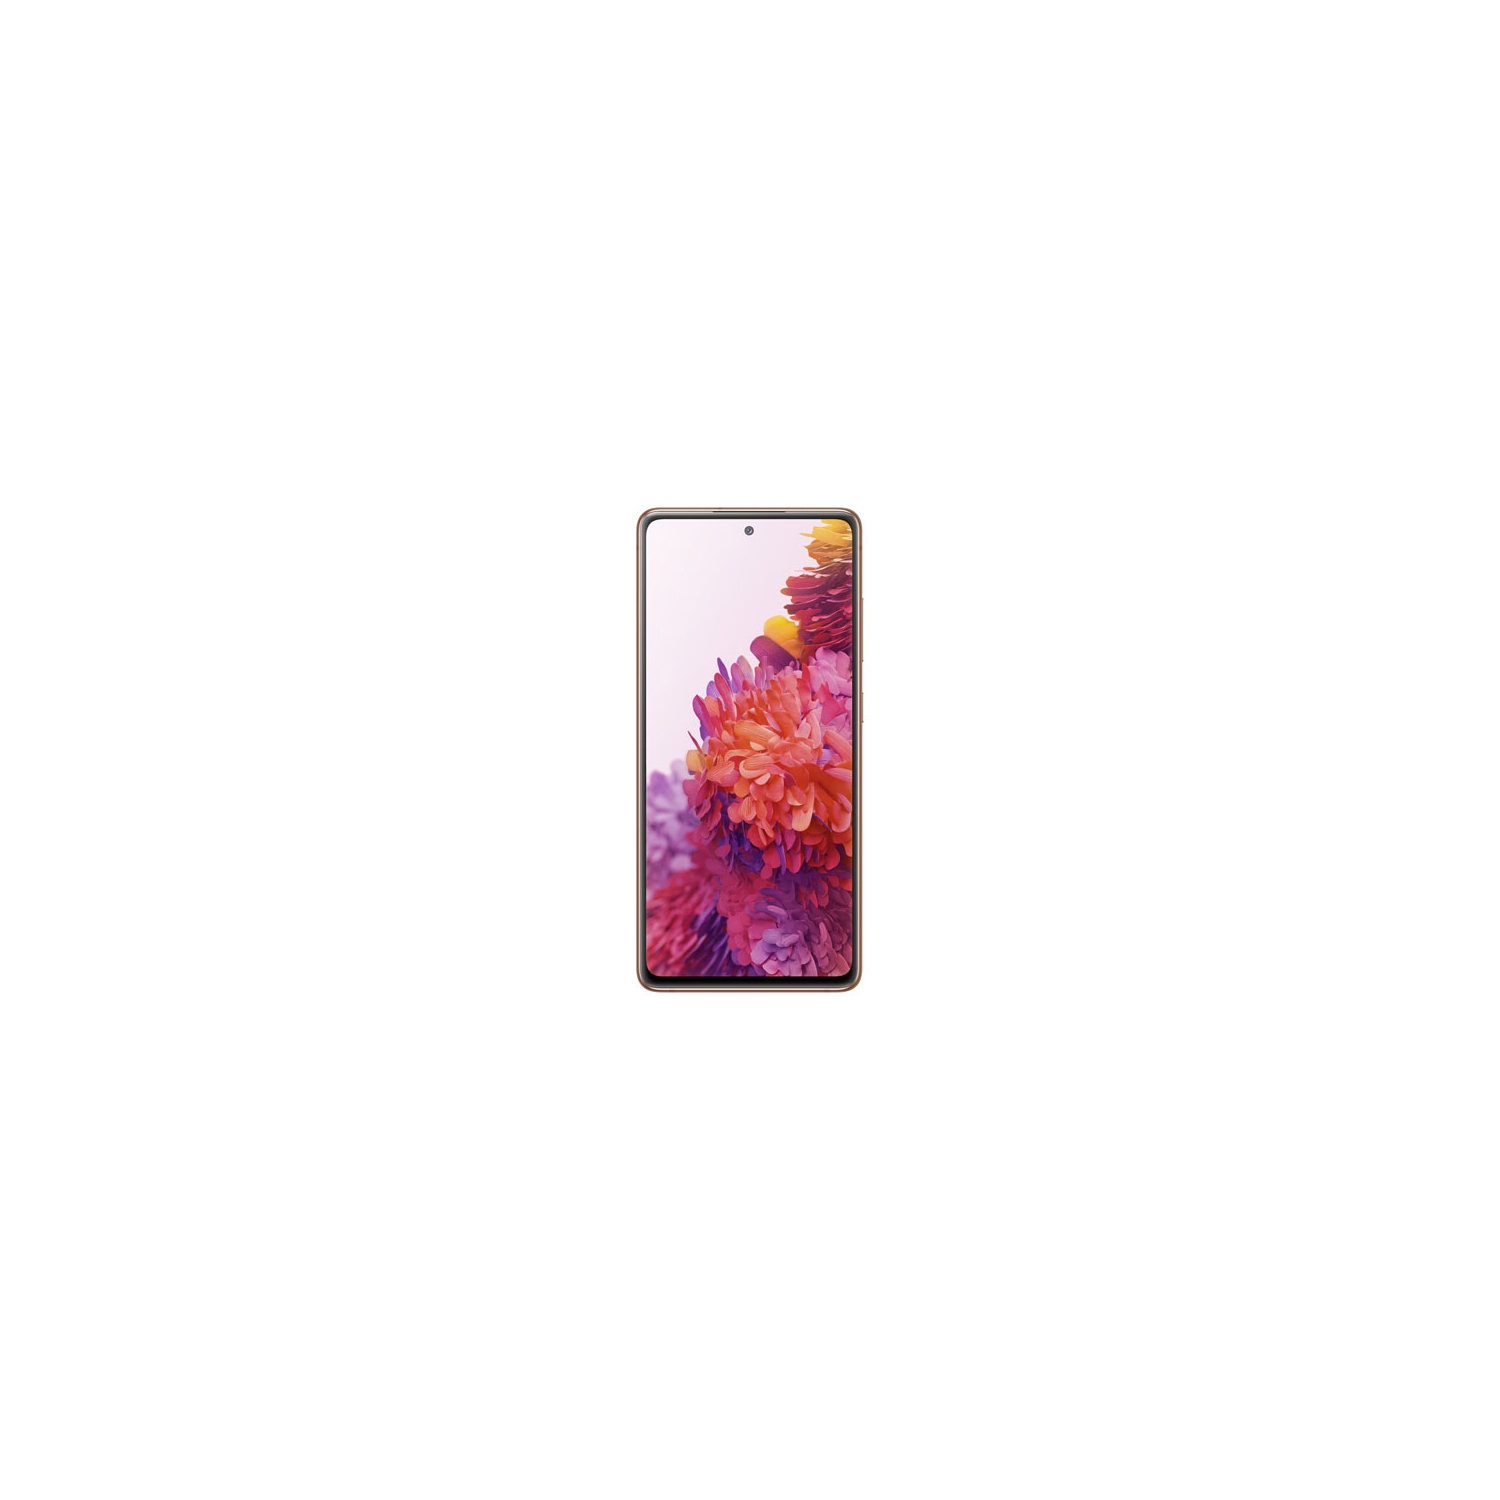 Samsung Galaxy S20 FE 128GB Smartphone - Cloud Orange - Unlocked - Open Box